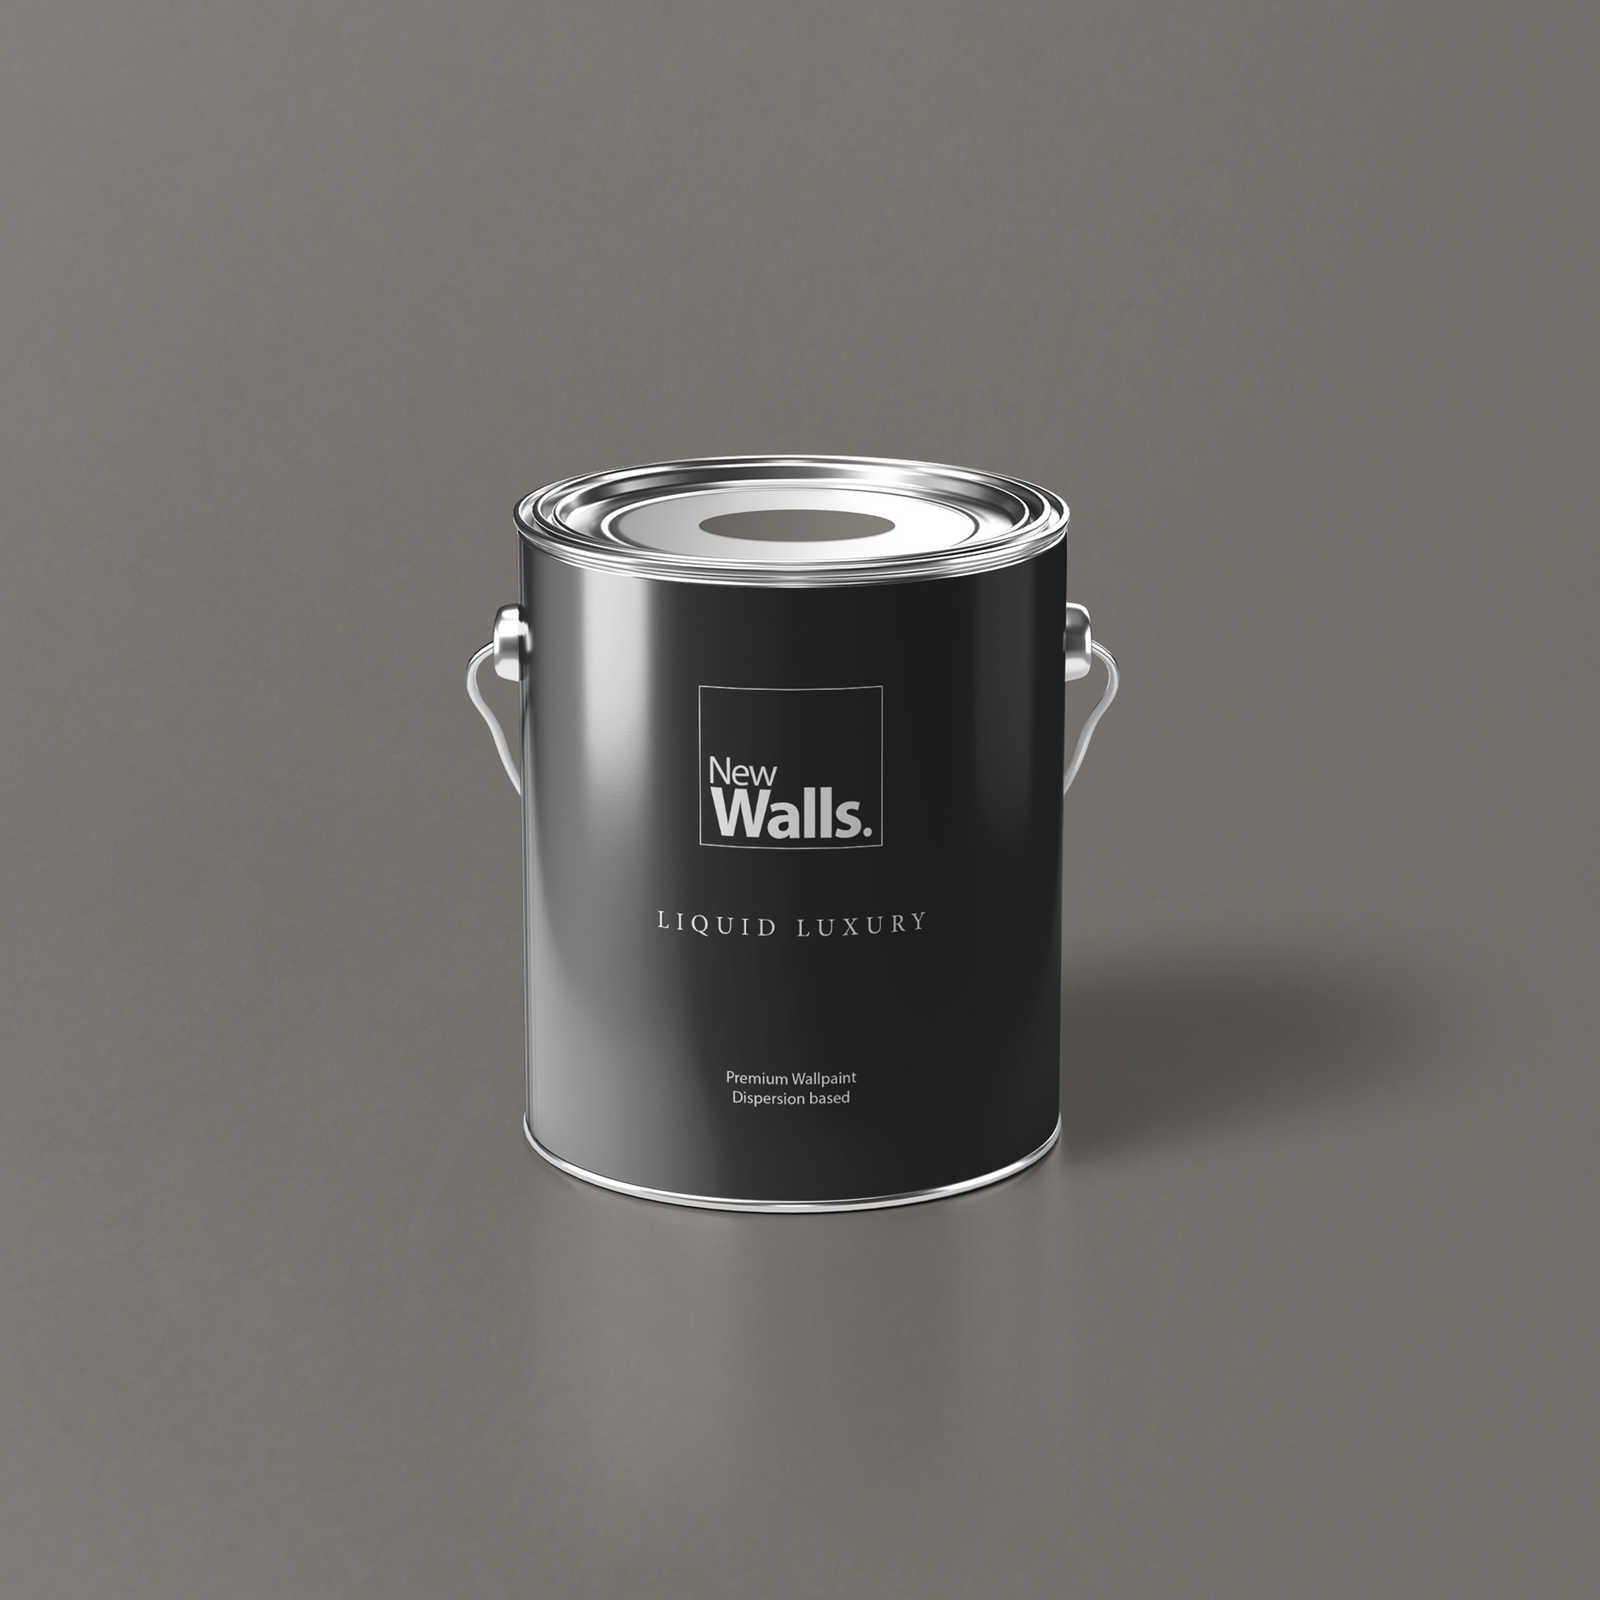 Premium Wall Paint neutral concrete grey »Creamy Grey« NW112 – 2,5 litre
